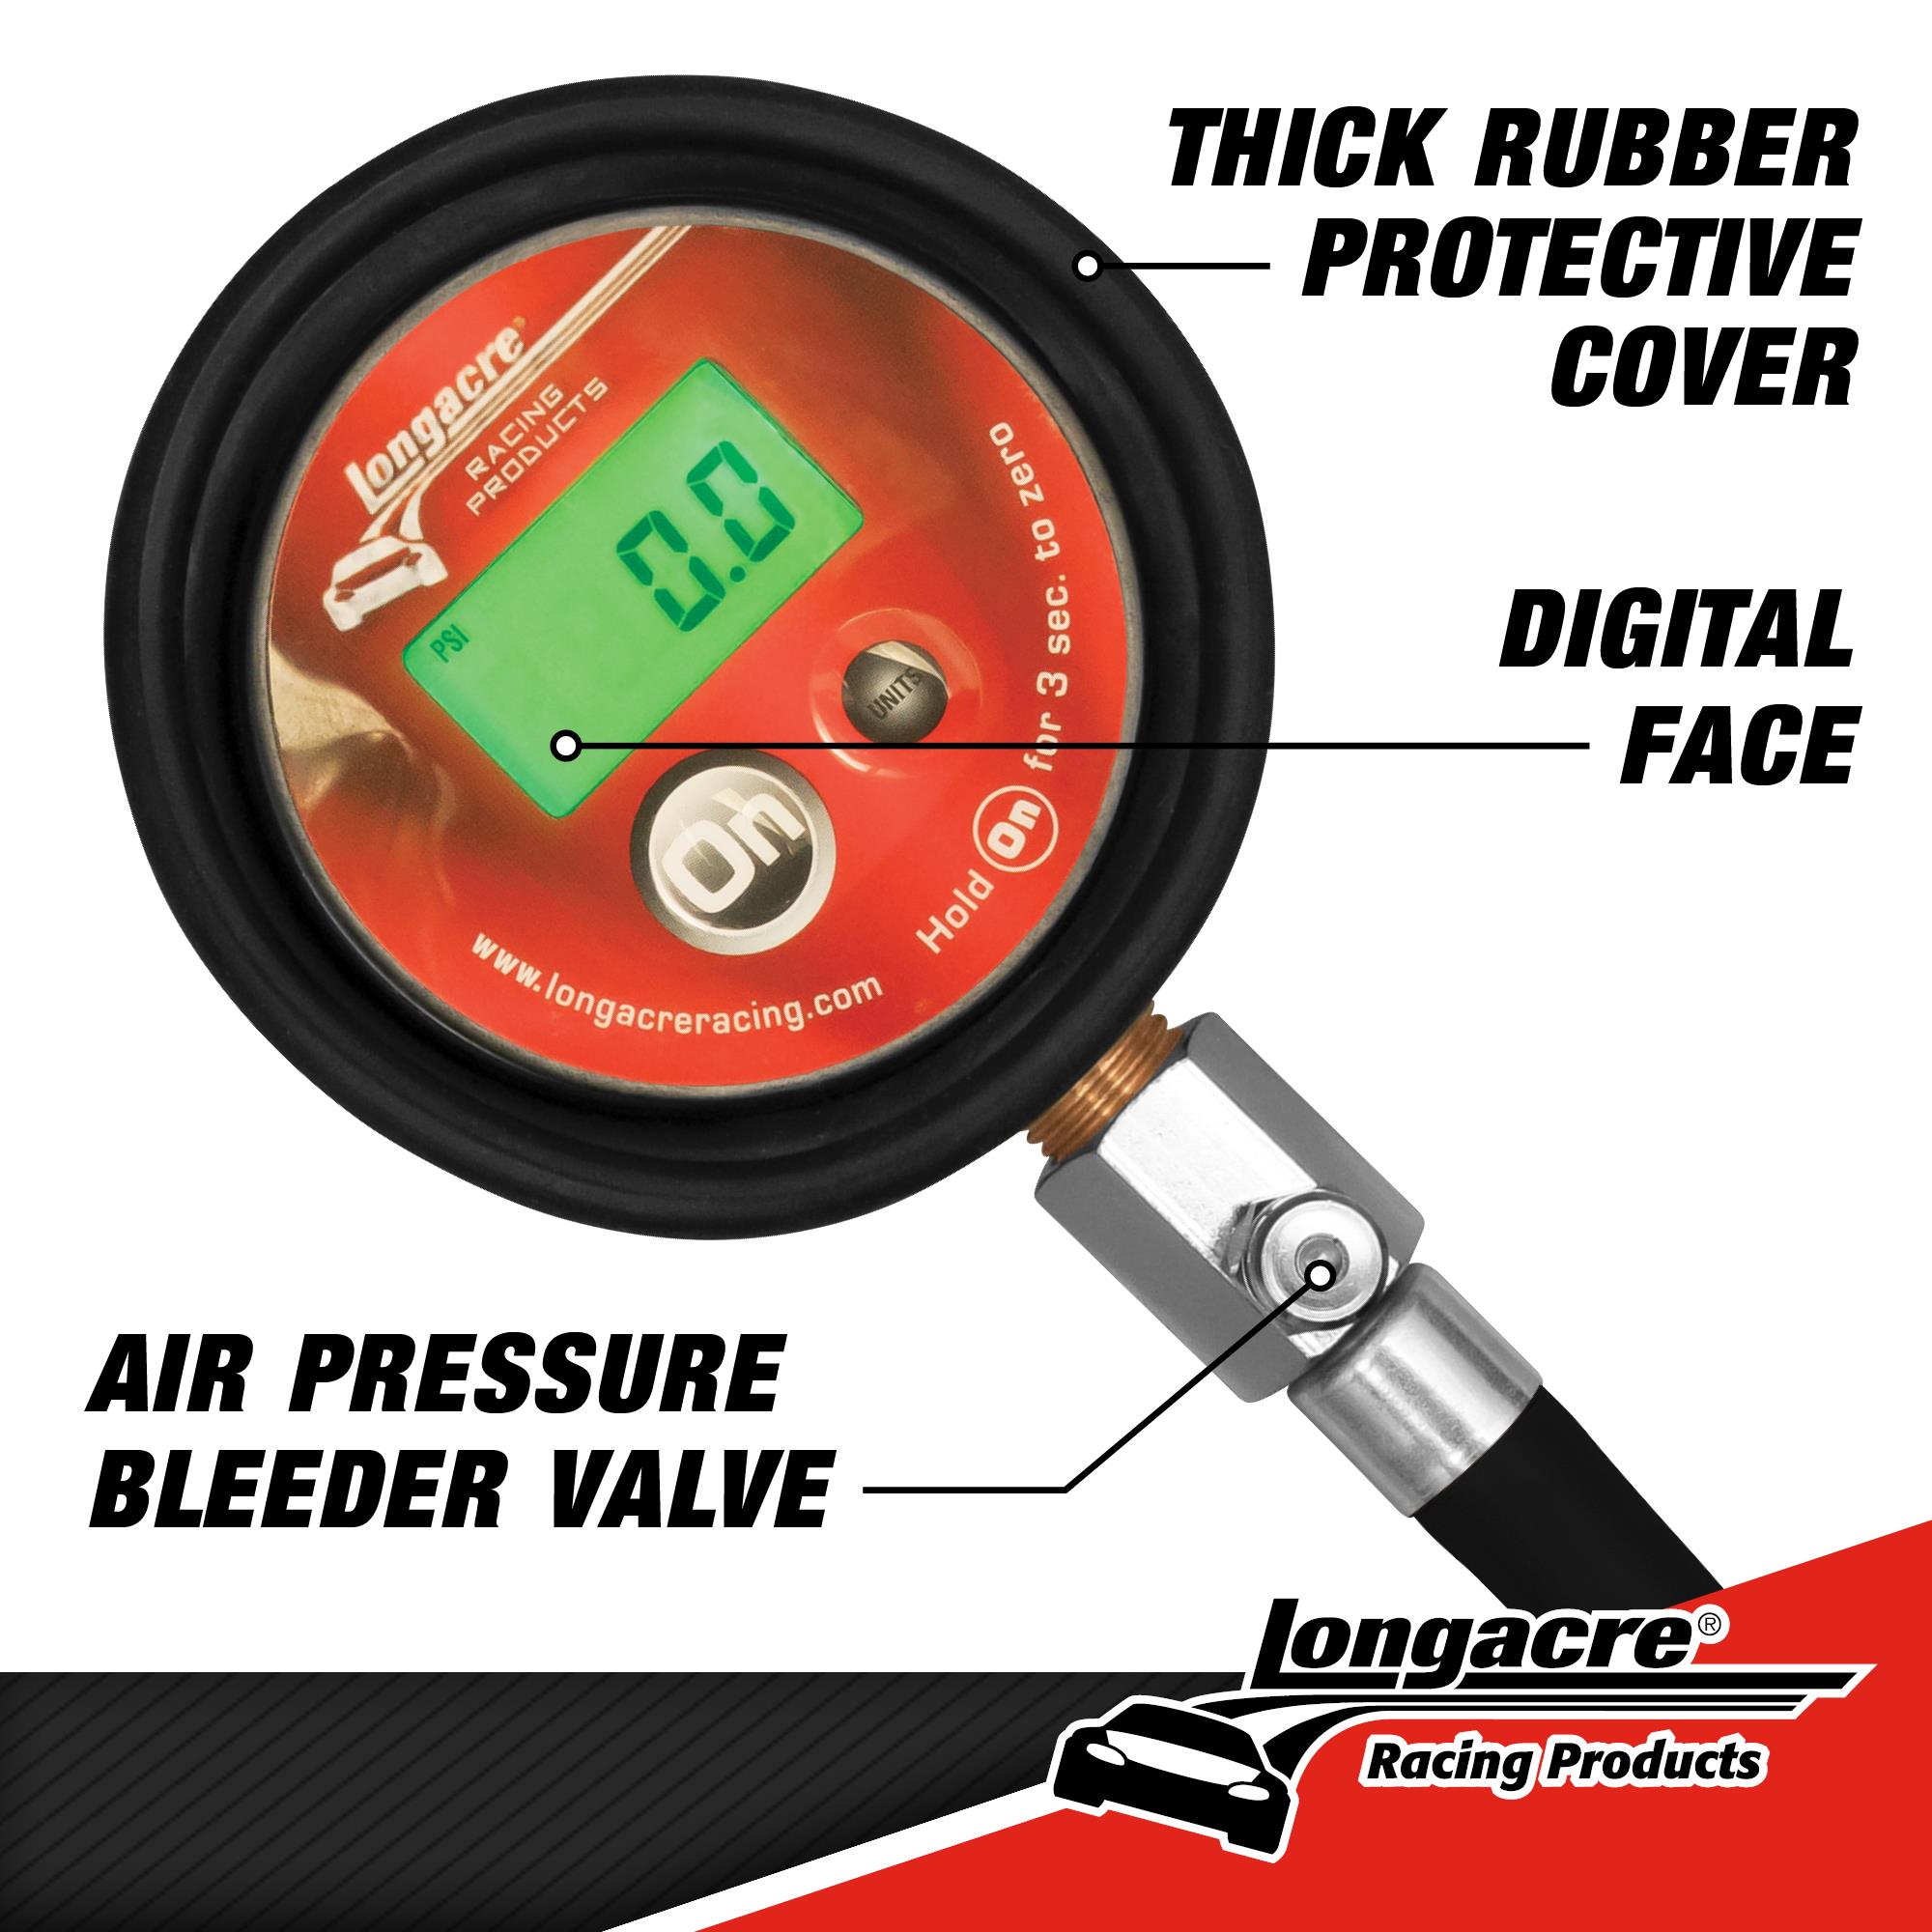 Semi Pro Digital Tire Pressure Gauge 0-60 psi